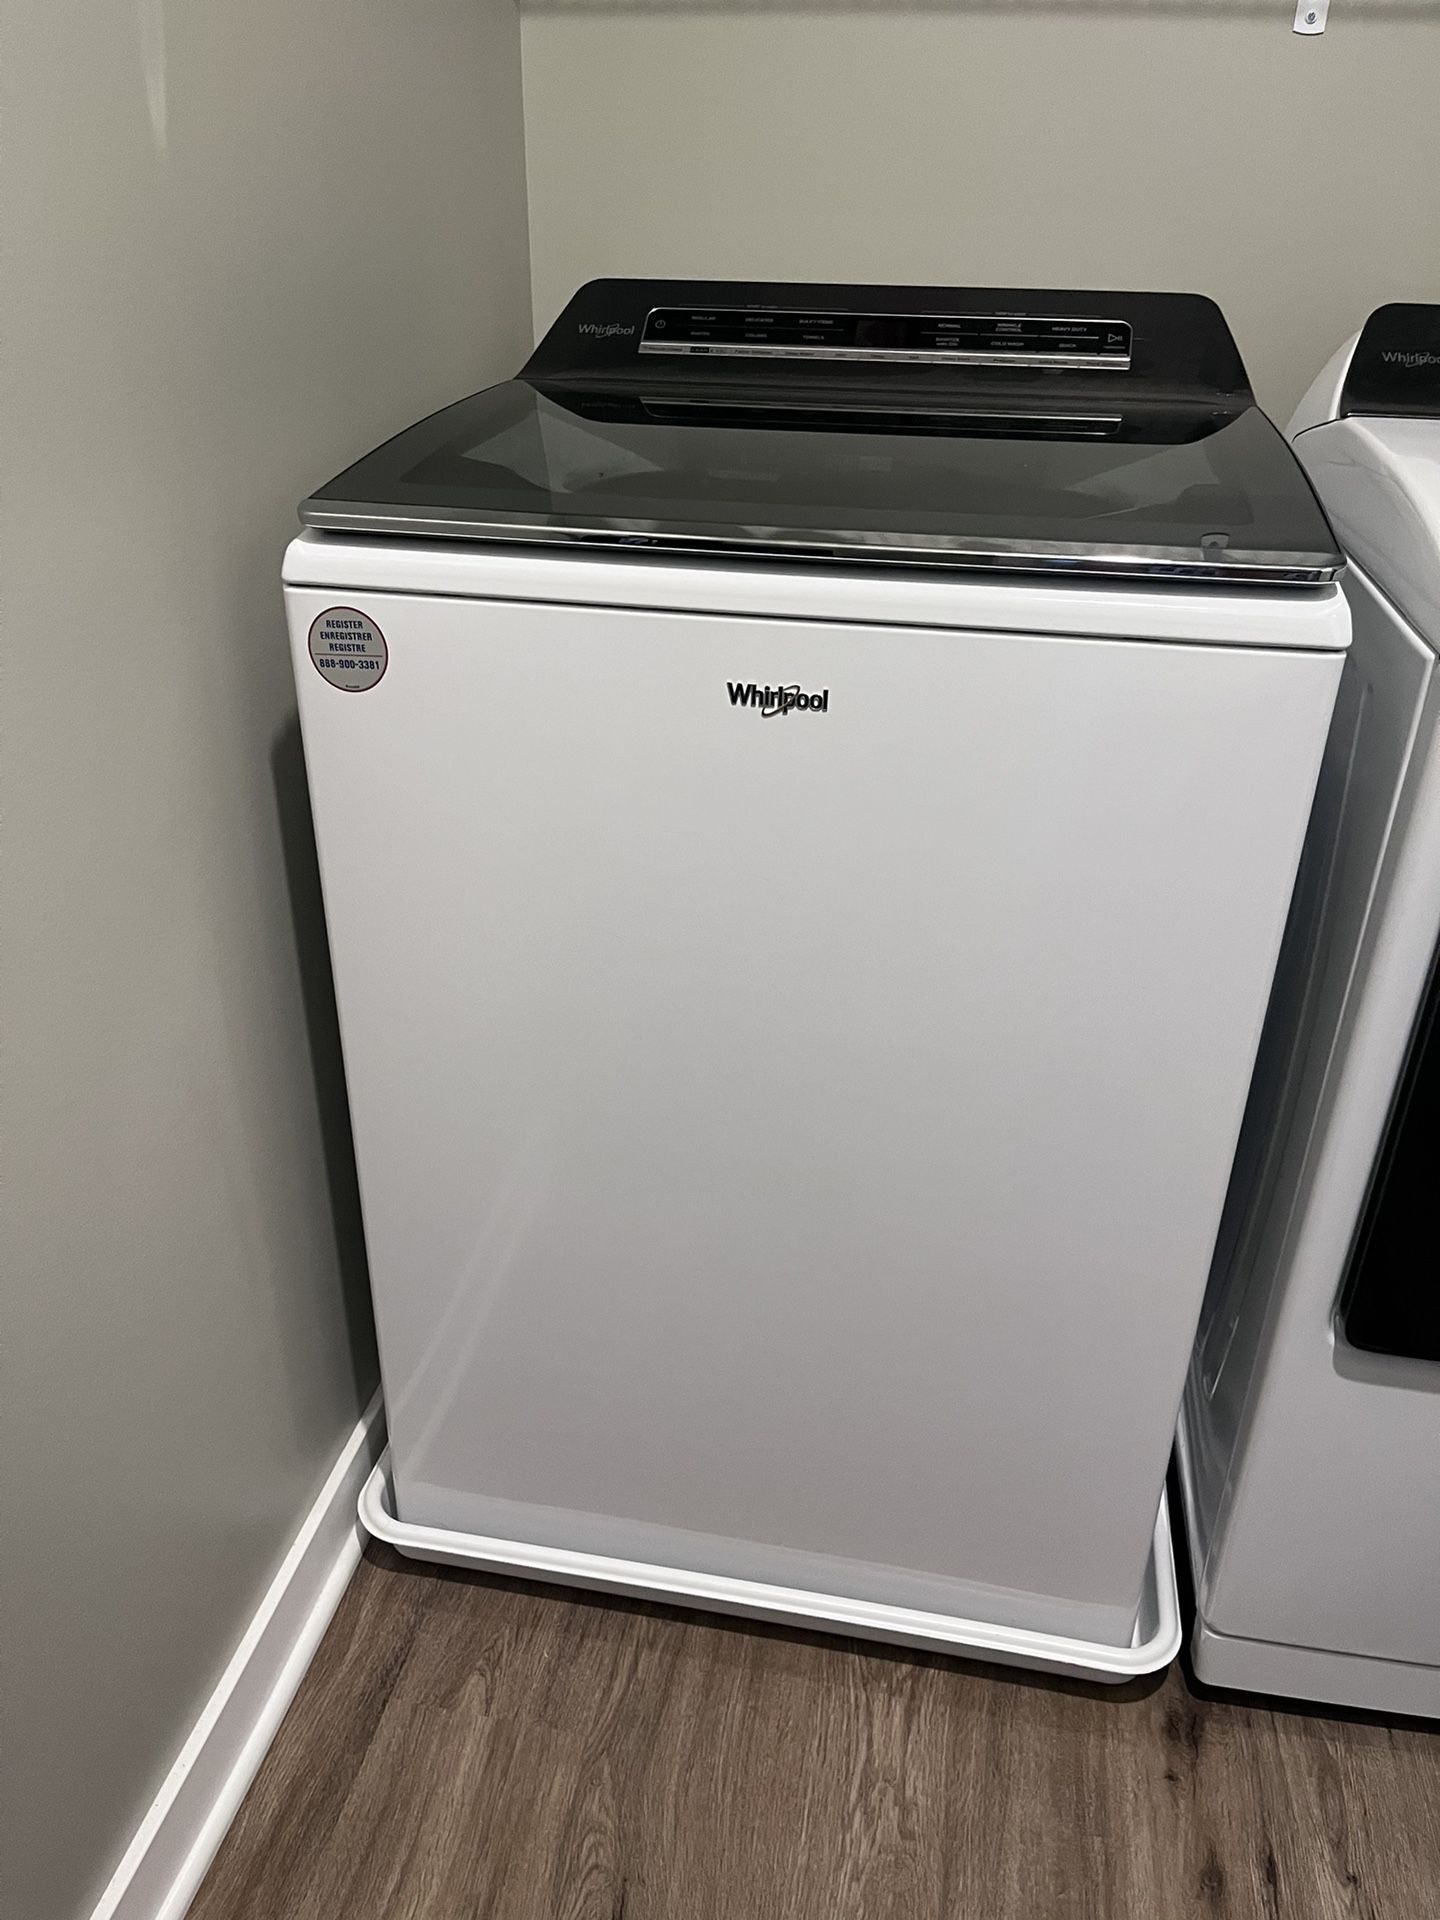 Whirpool Washer And Dryer 